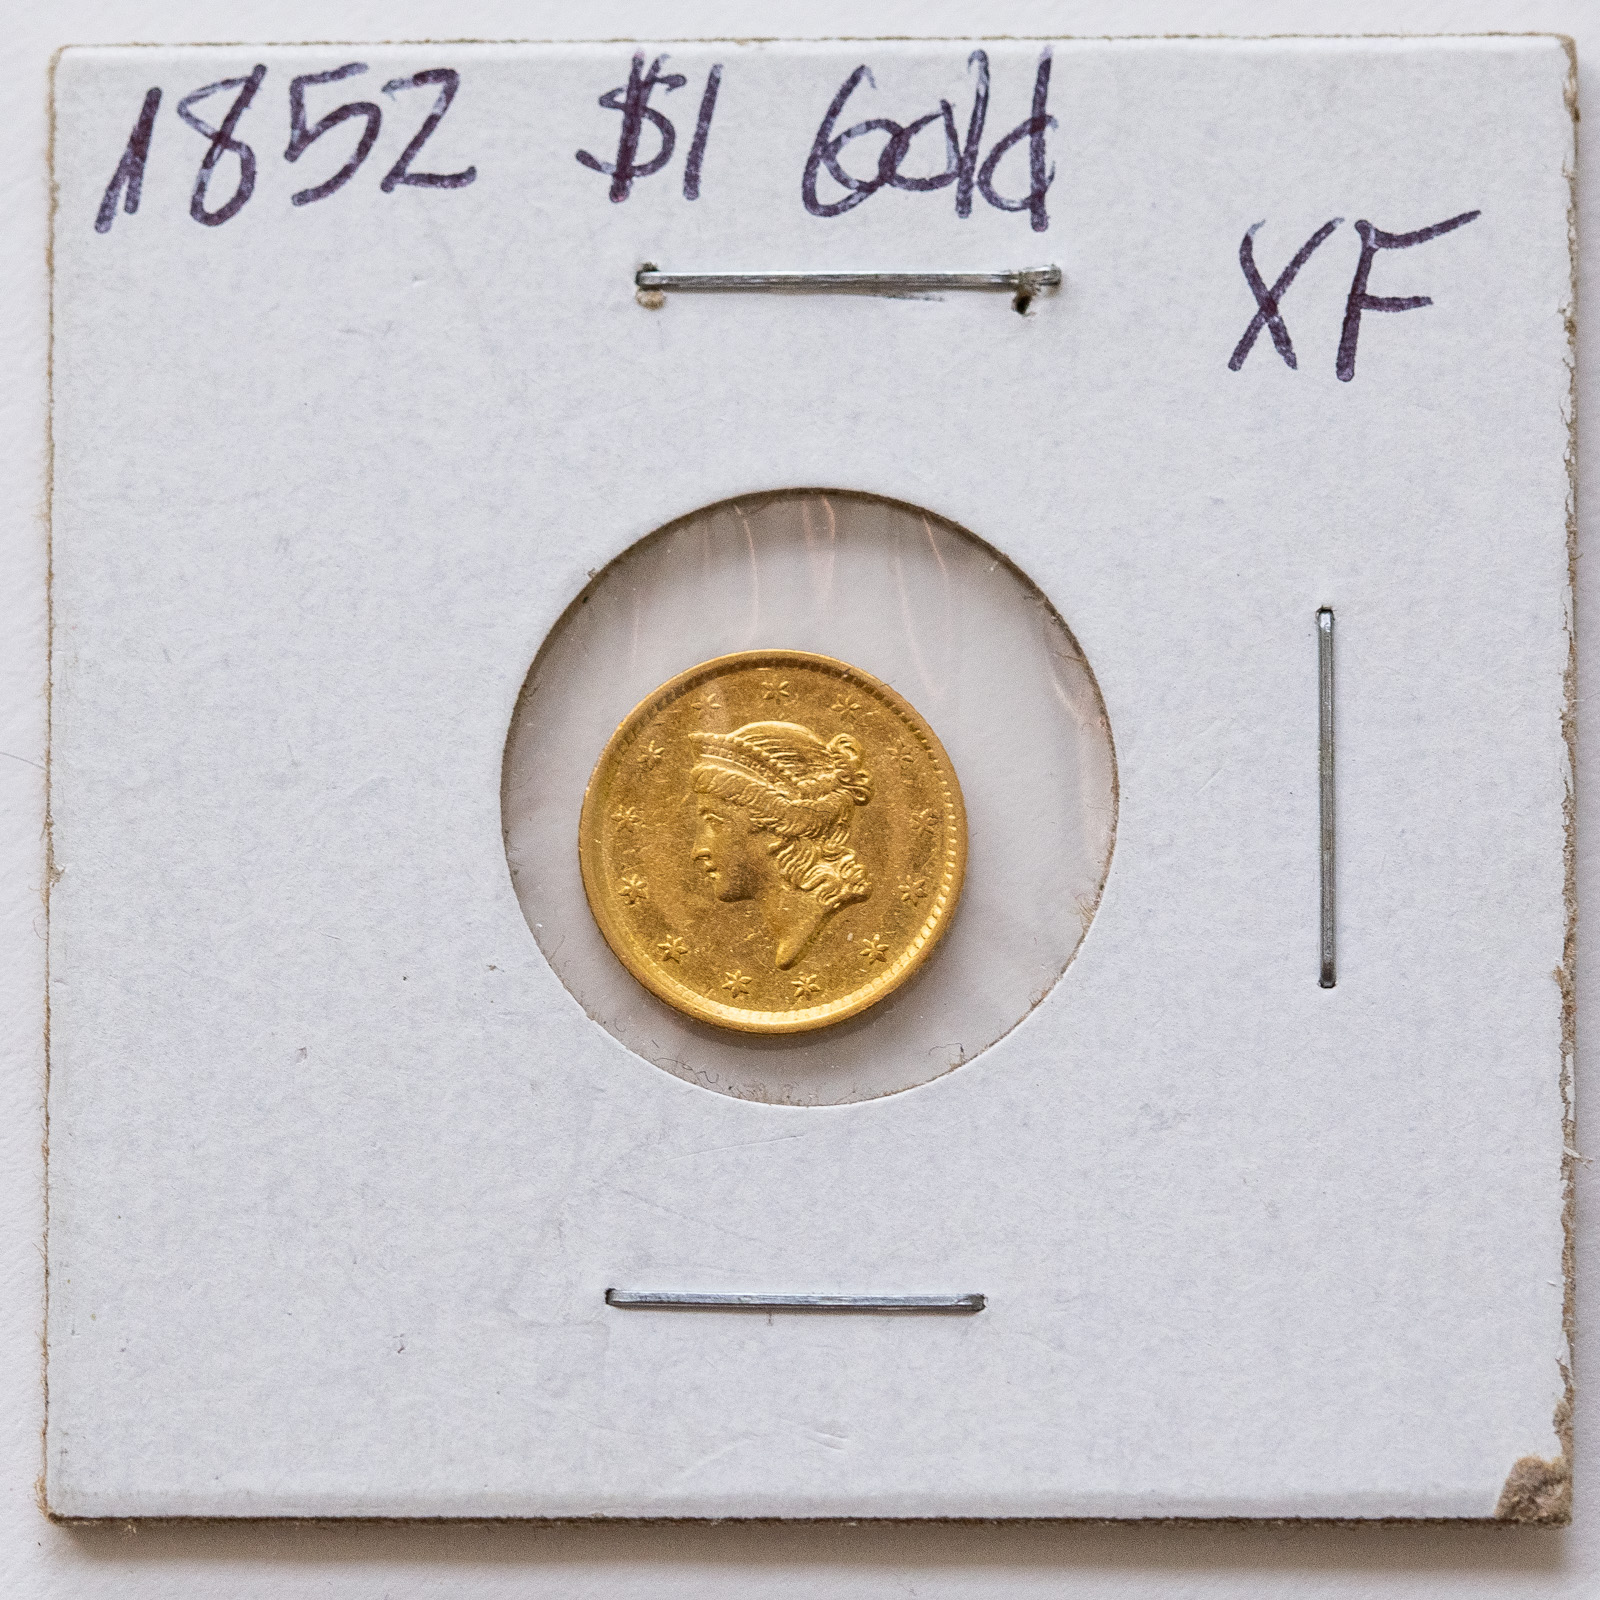 1852 $1 GOLD CORONET XF .